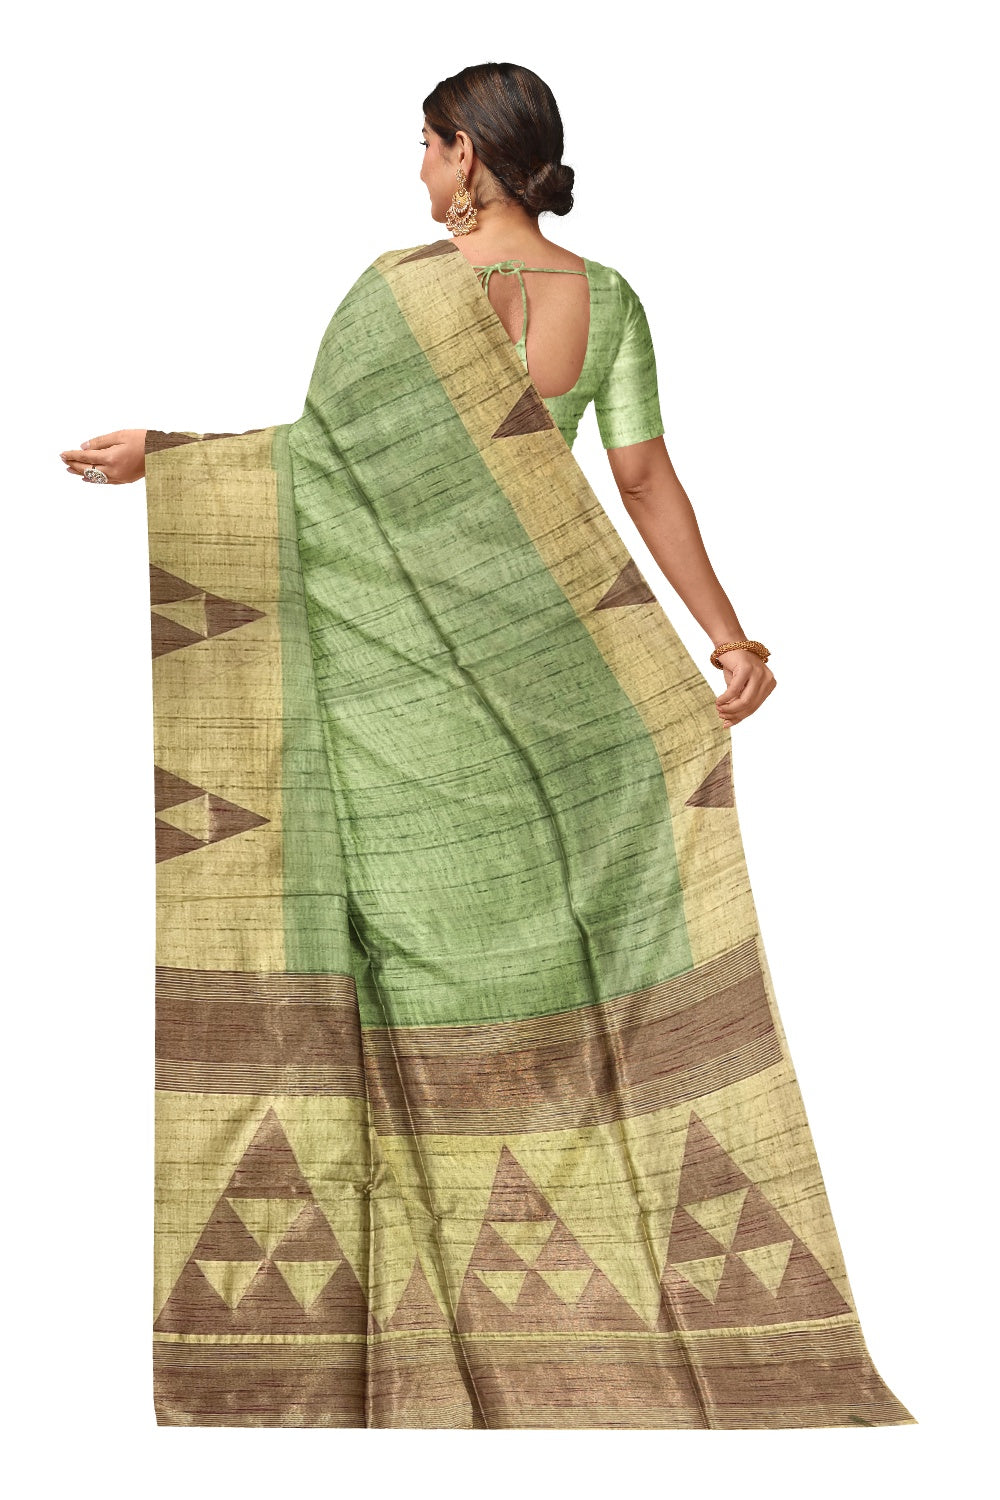 Southloom Light Green Semi Tussar Saree with Light Brown Designer Pallu